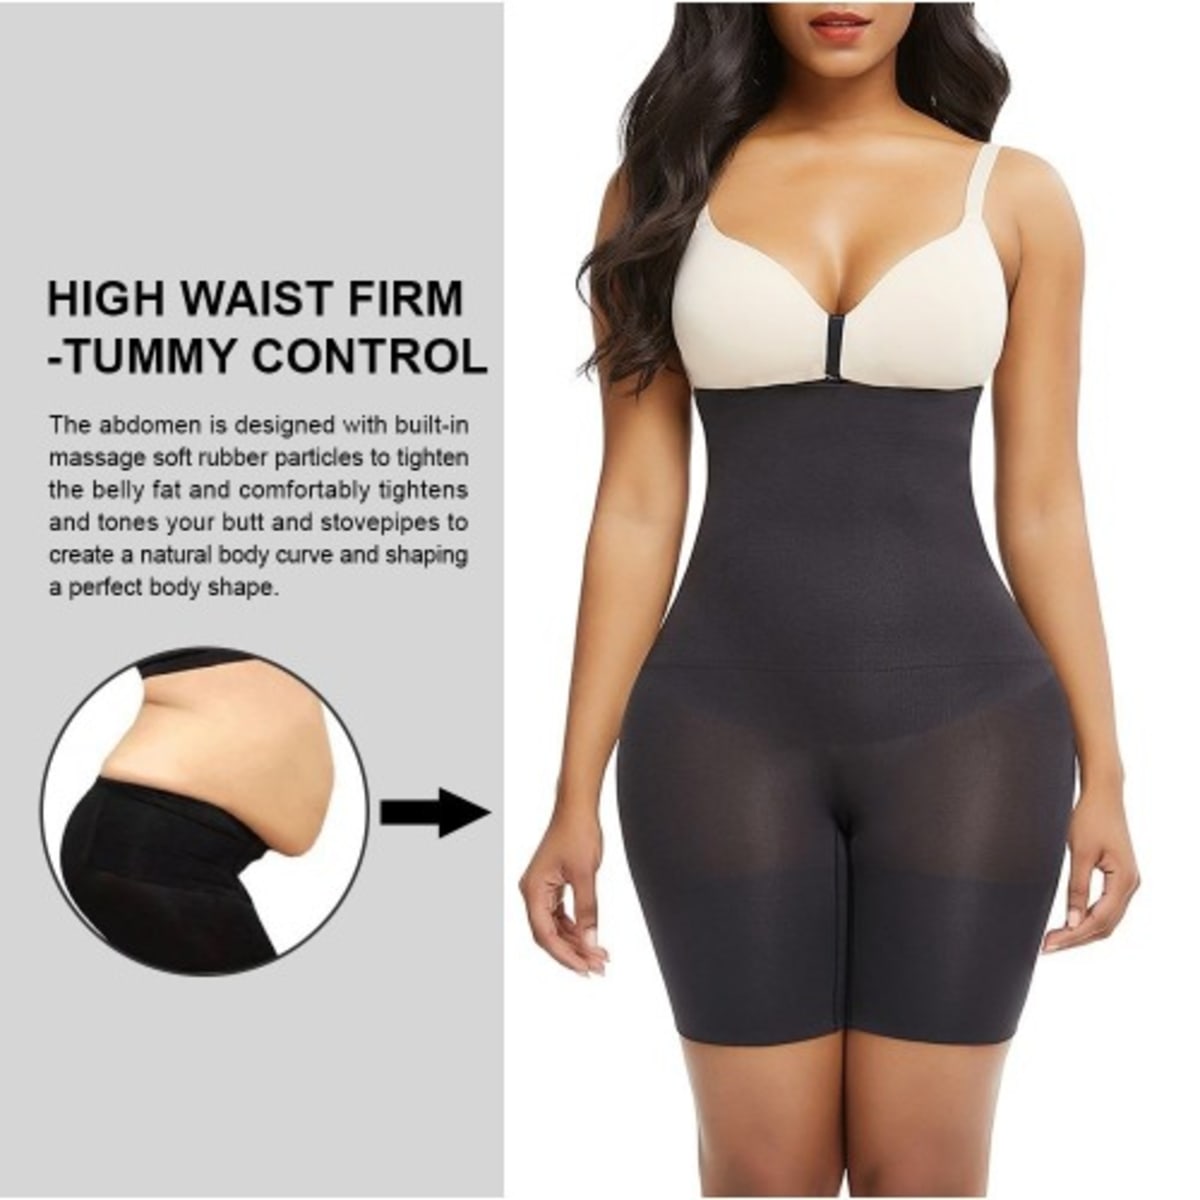 High Waist Firm Tummy Control